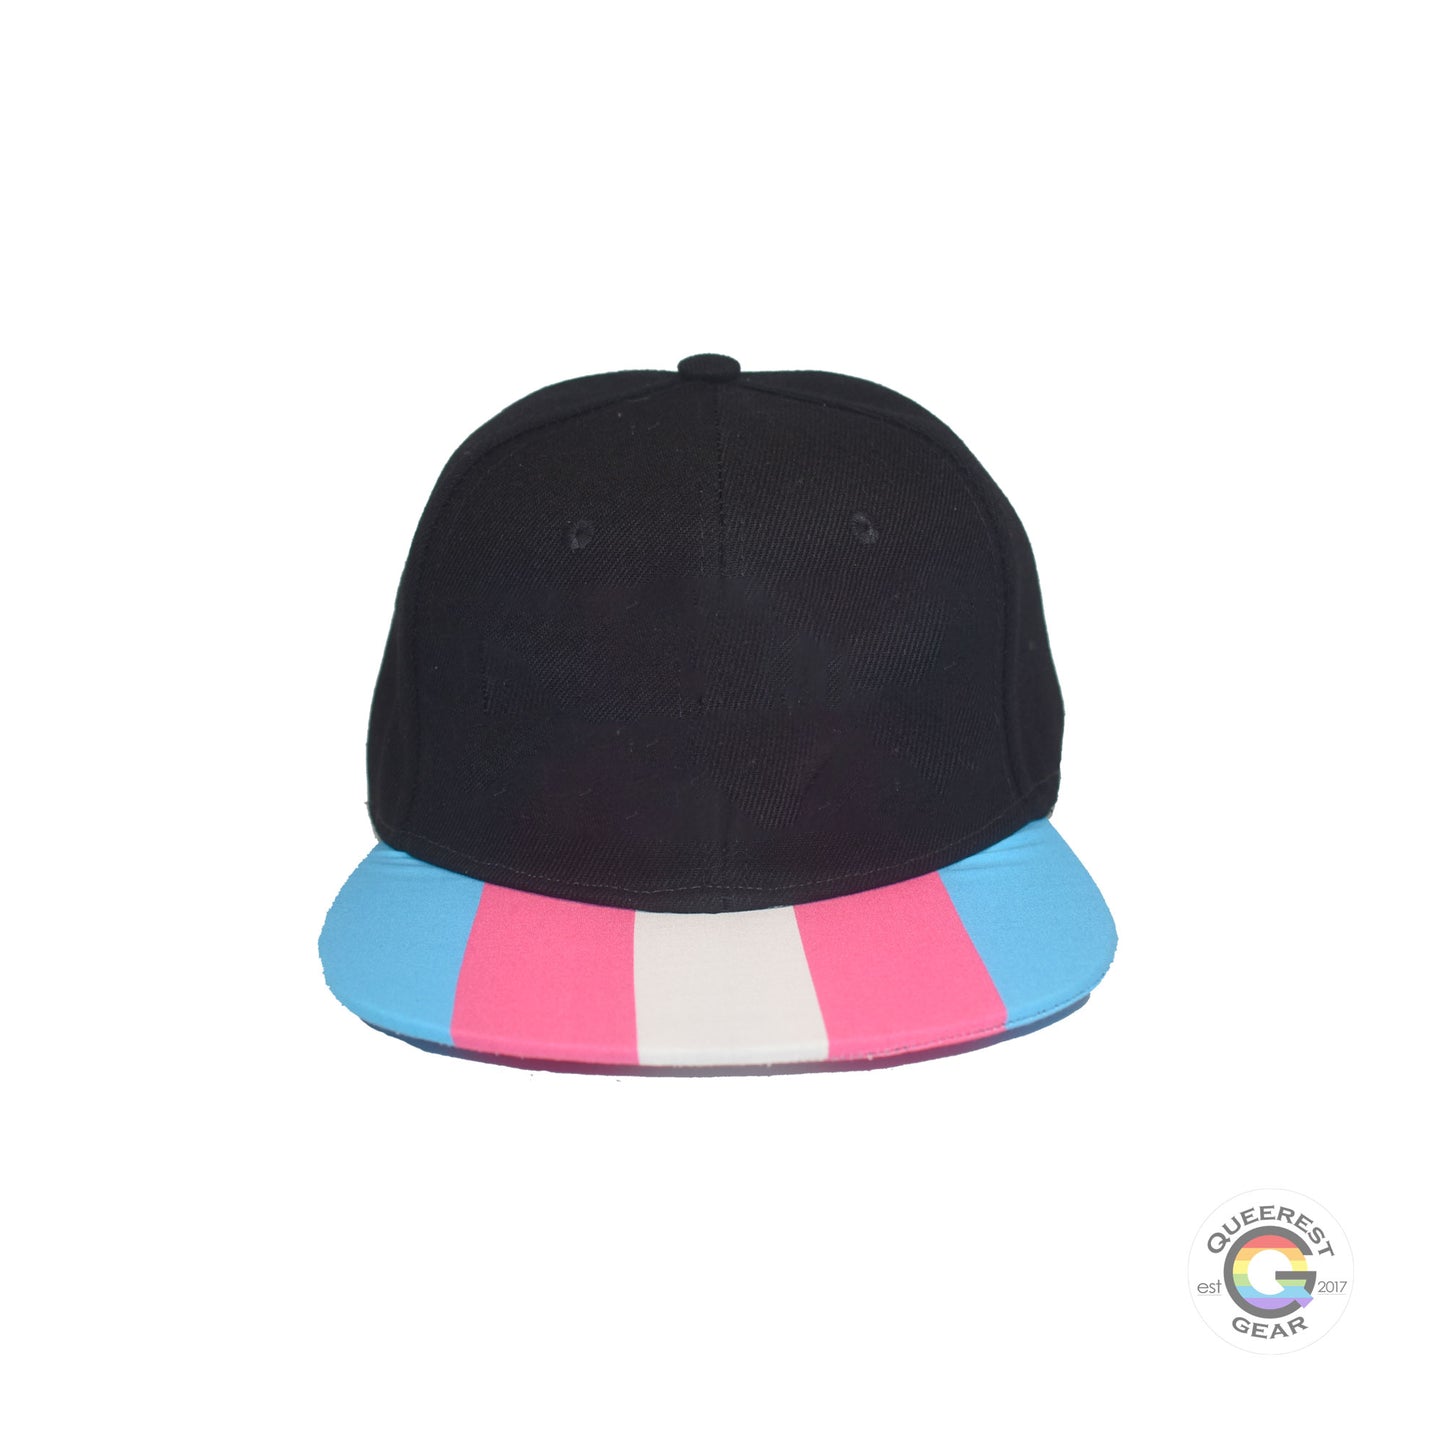 Black flat bill snapback hat. The brim has the transgender pride flag on both sides. Front view